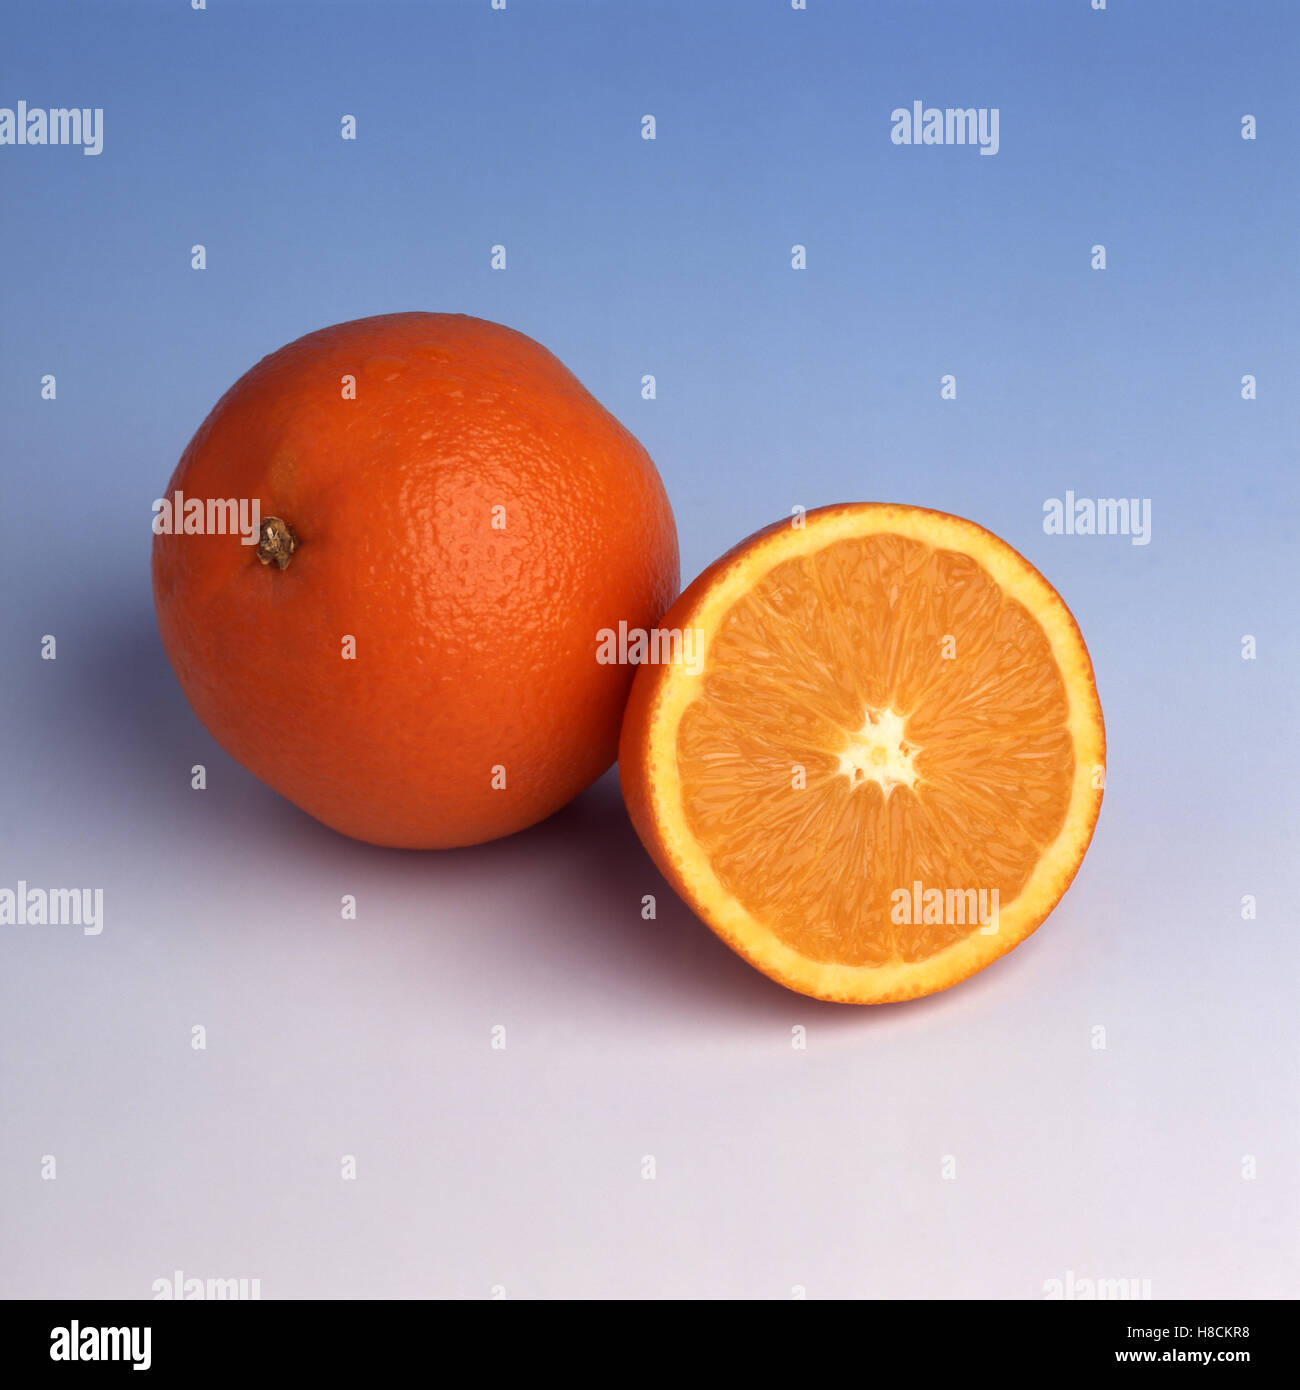 https://c8.alamy.com/comp/H8CKR8/orange-plus-half-an-orange-H8CKR8.jpg